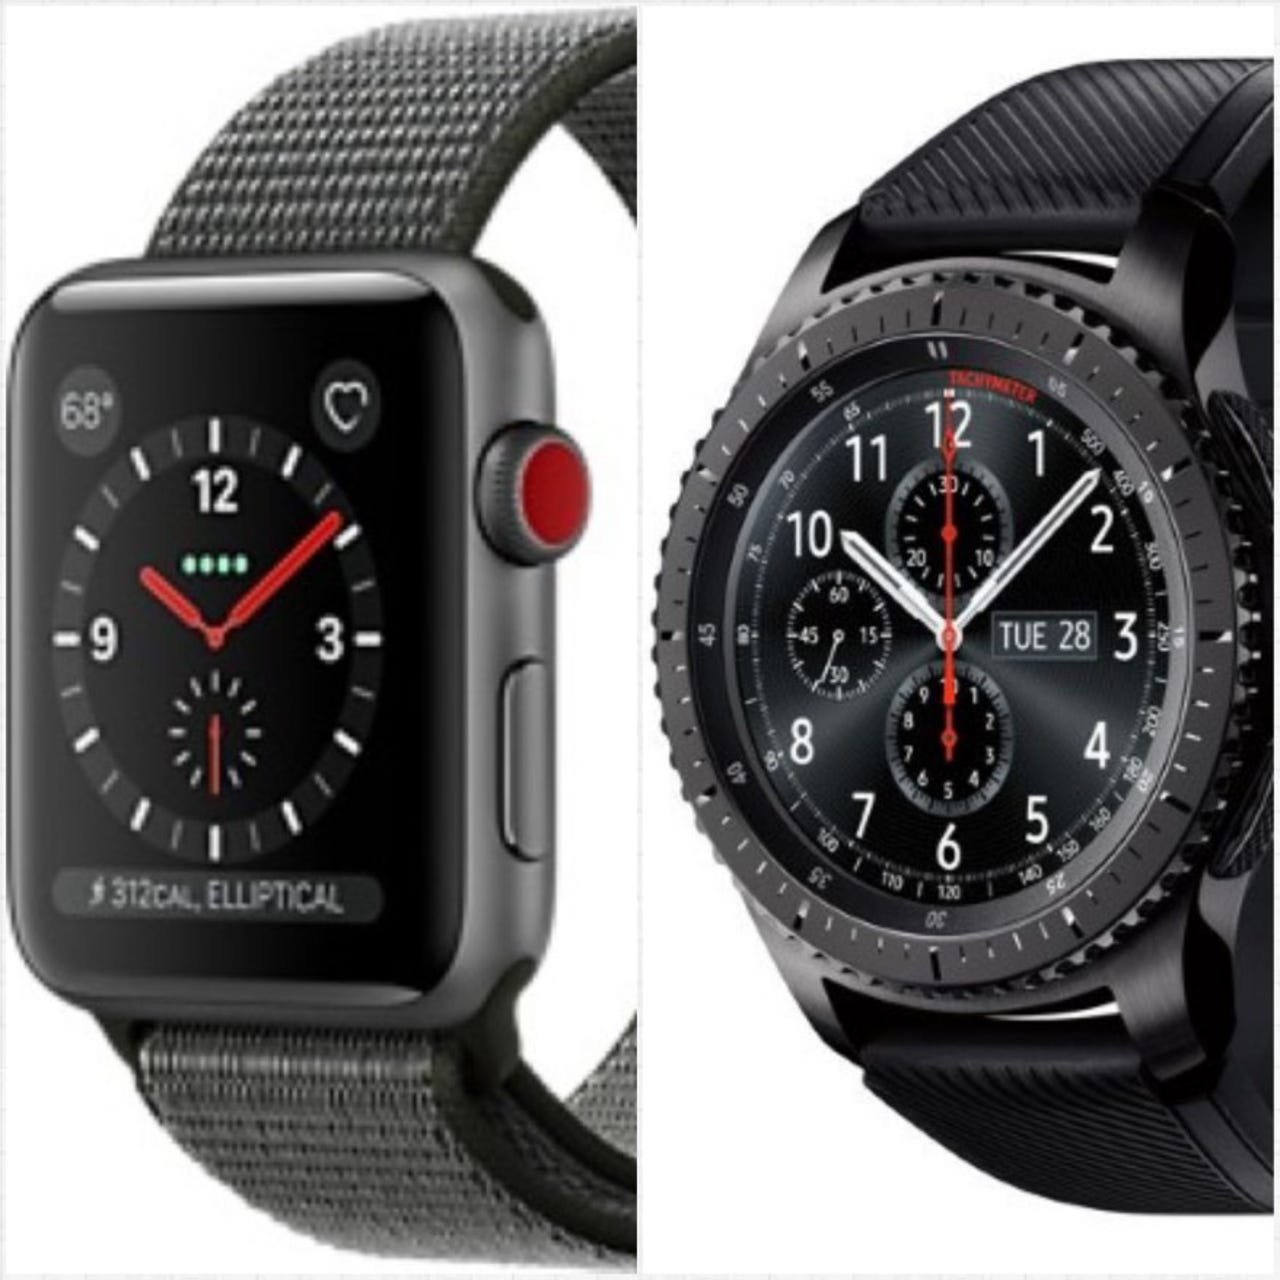 applewatch-gear-s3.jpg